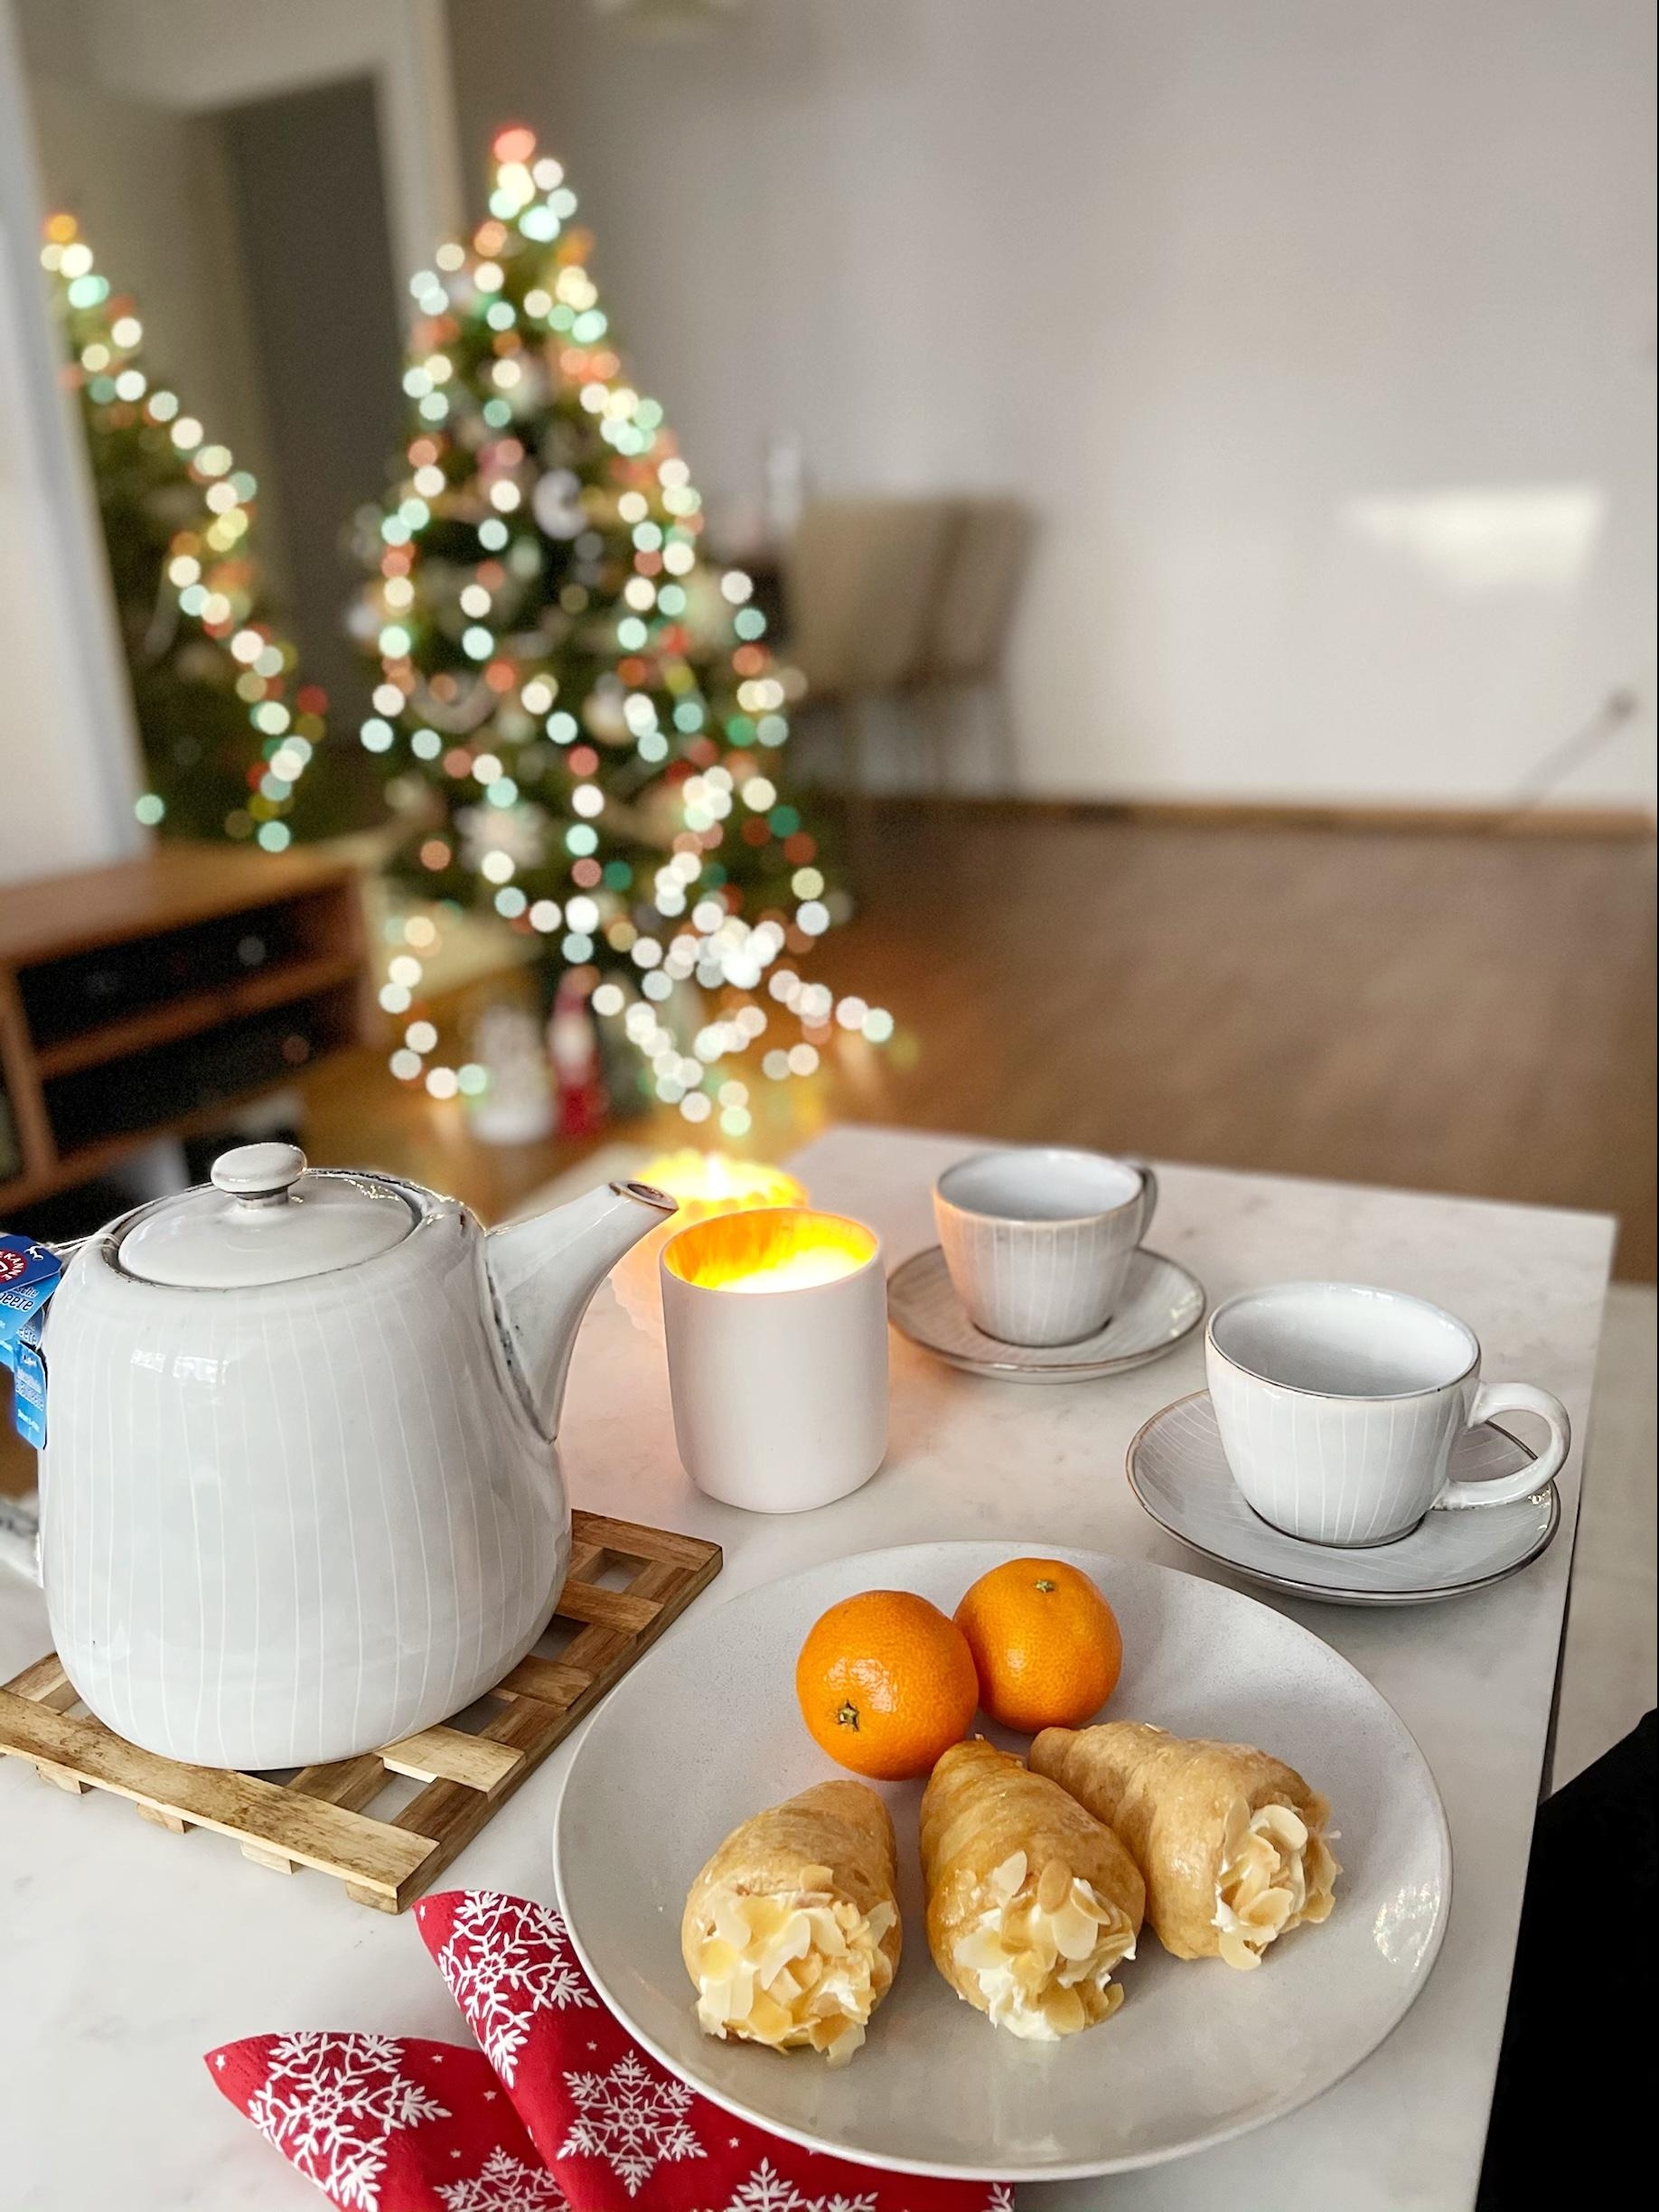 Weekend vibes #teatime #christmas #love #interior #livingroom